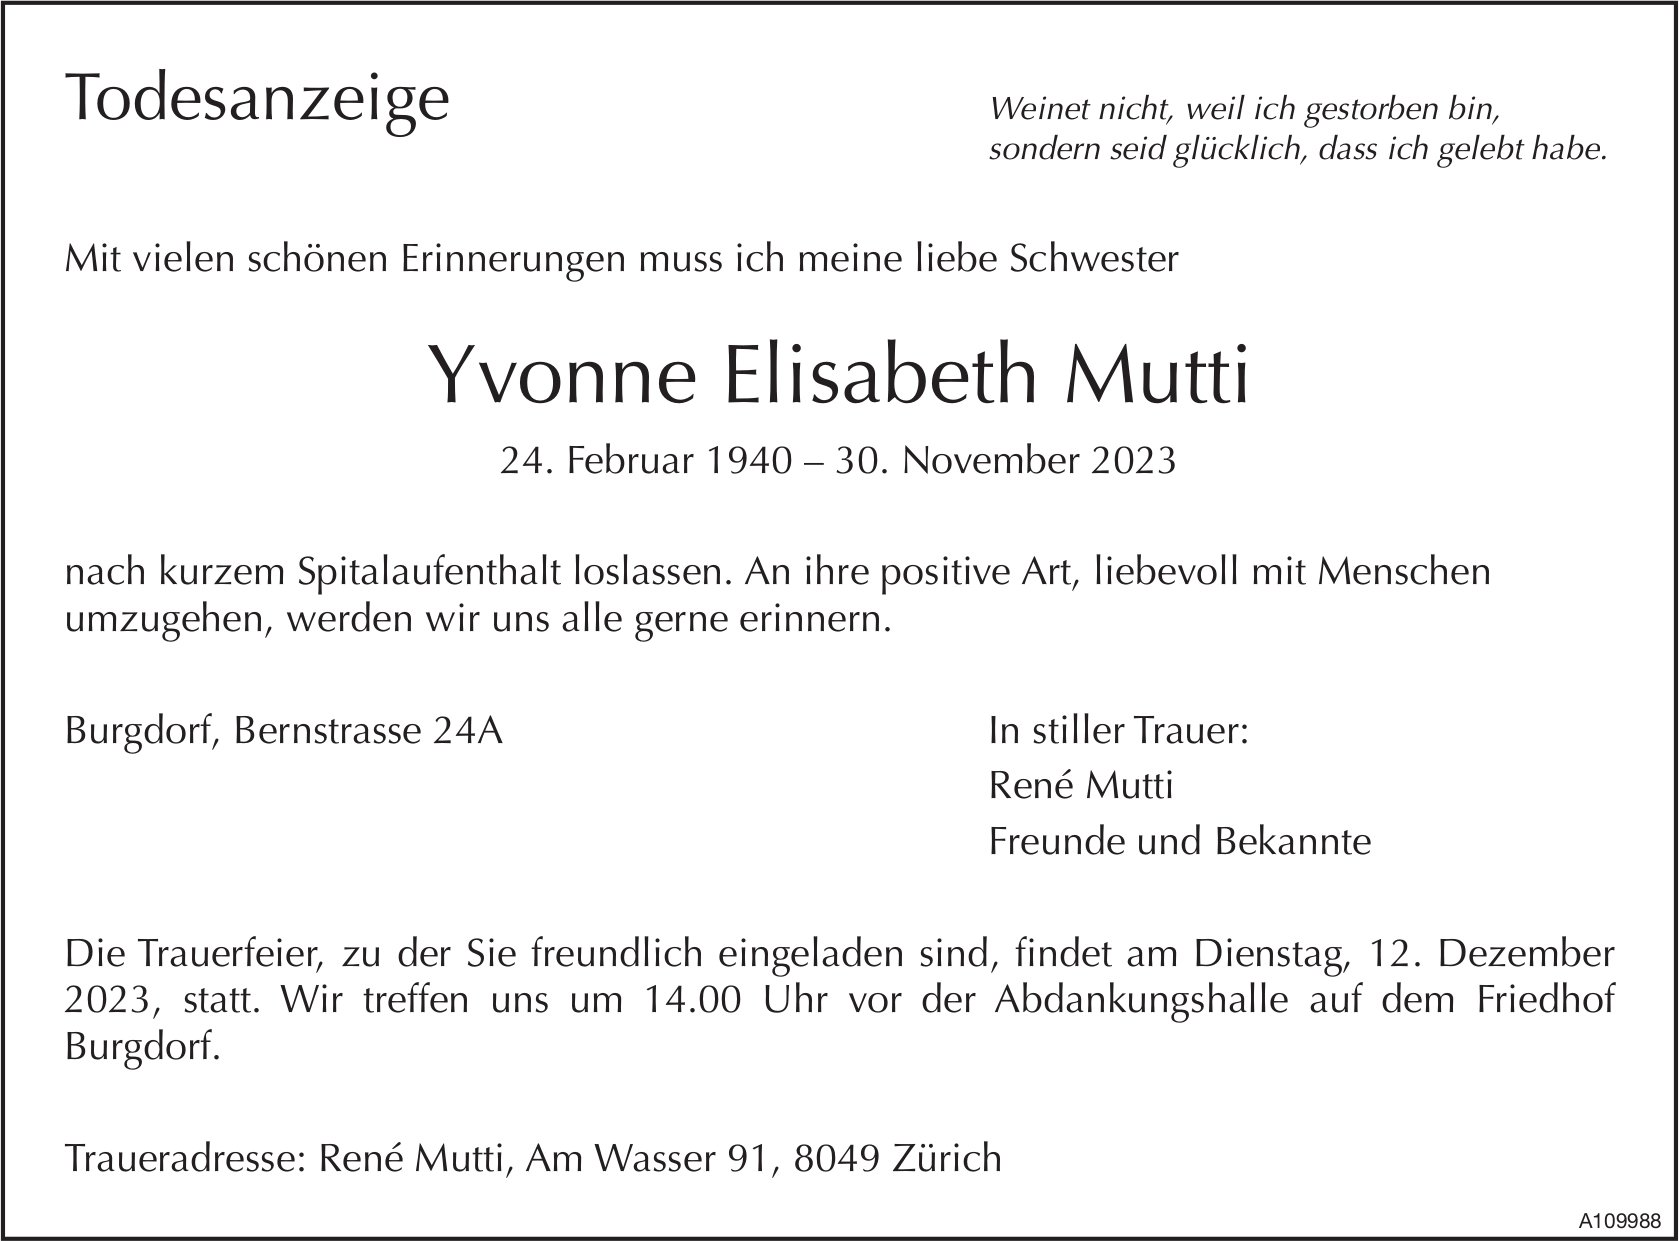 Yvonne Elisabeth Mutti, November 2023 / TA